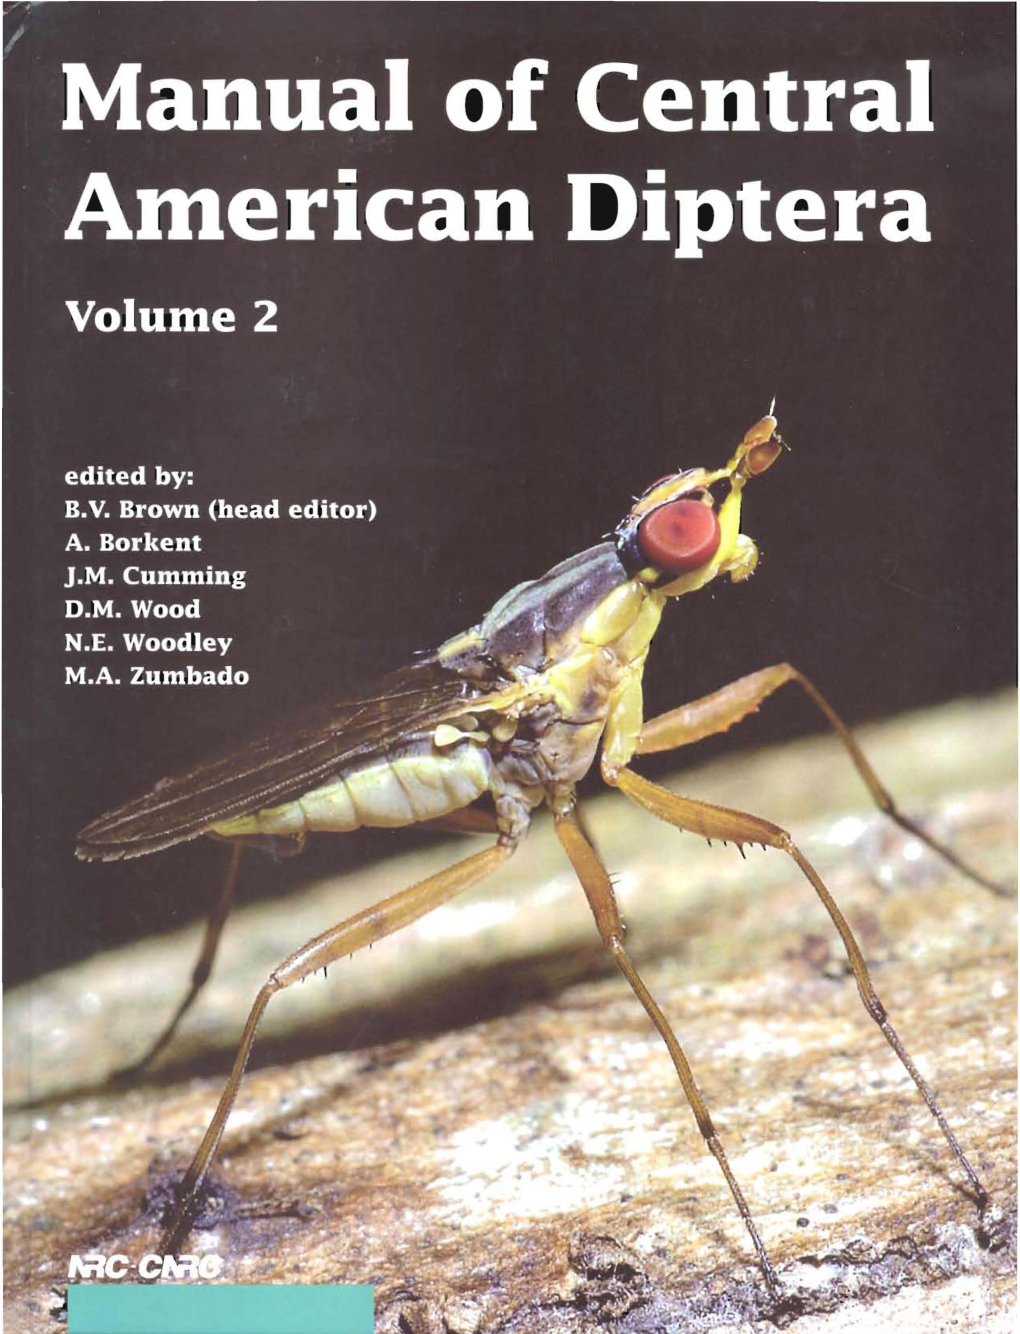 Ma Ual of Central American Diptera Volunte 2